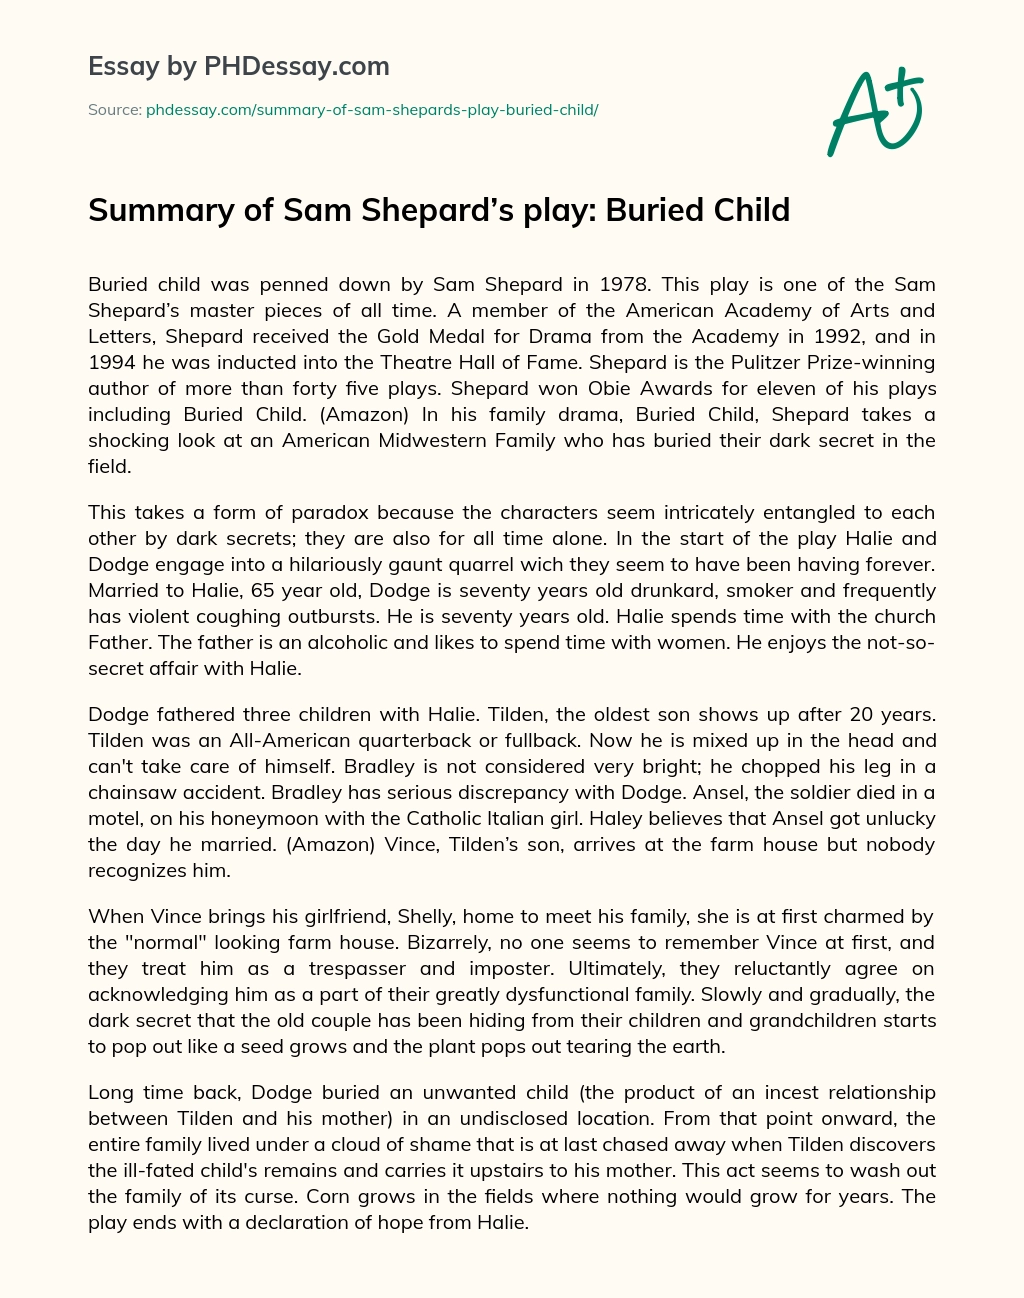 Summary of Sam Shepard’s play: Buried Child essay